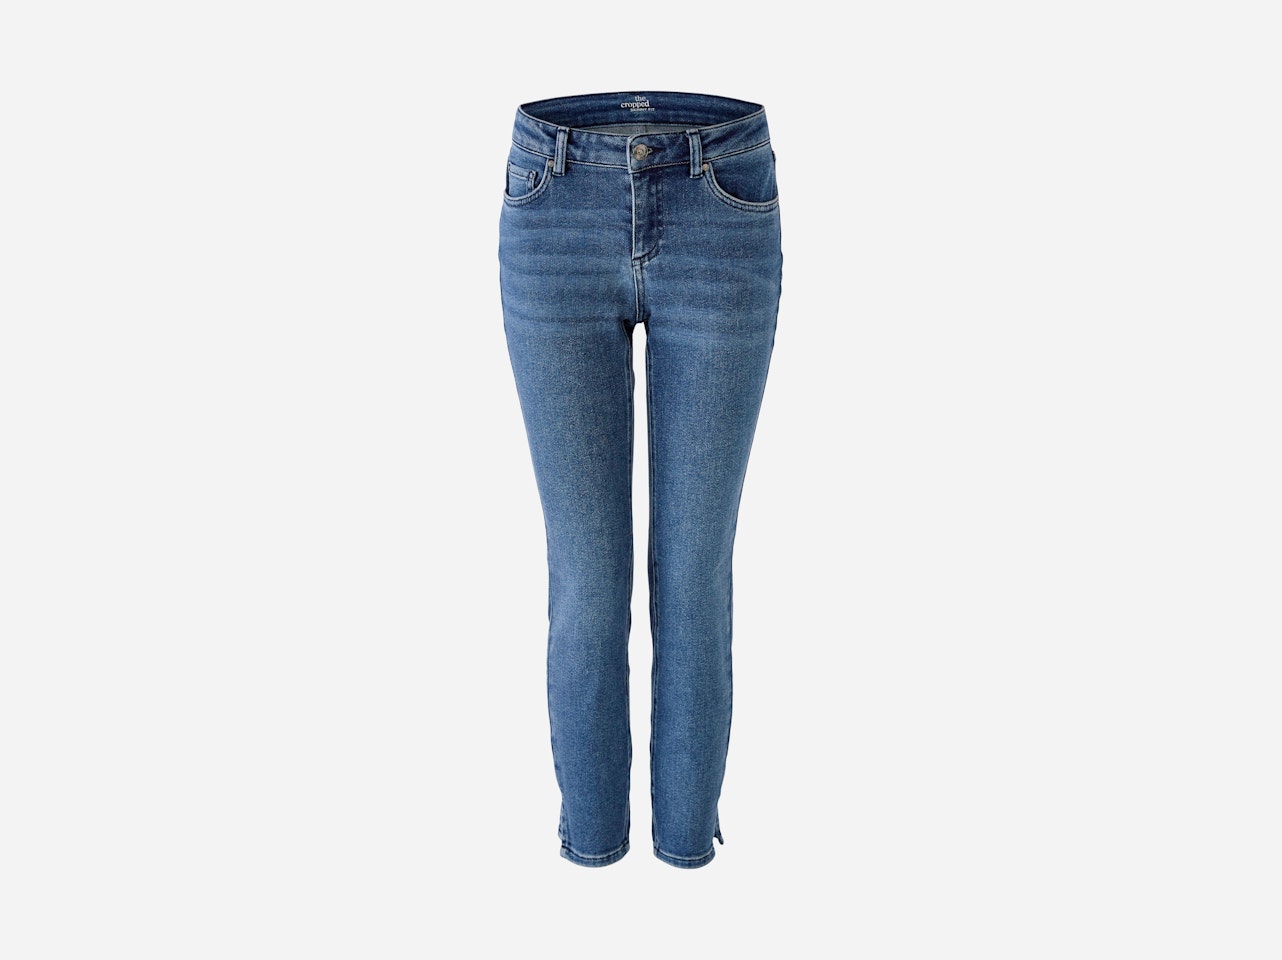 Bild 7 von Jeans THE CROPPED Skinny fit, cropped in darkblue denim | Oui